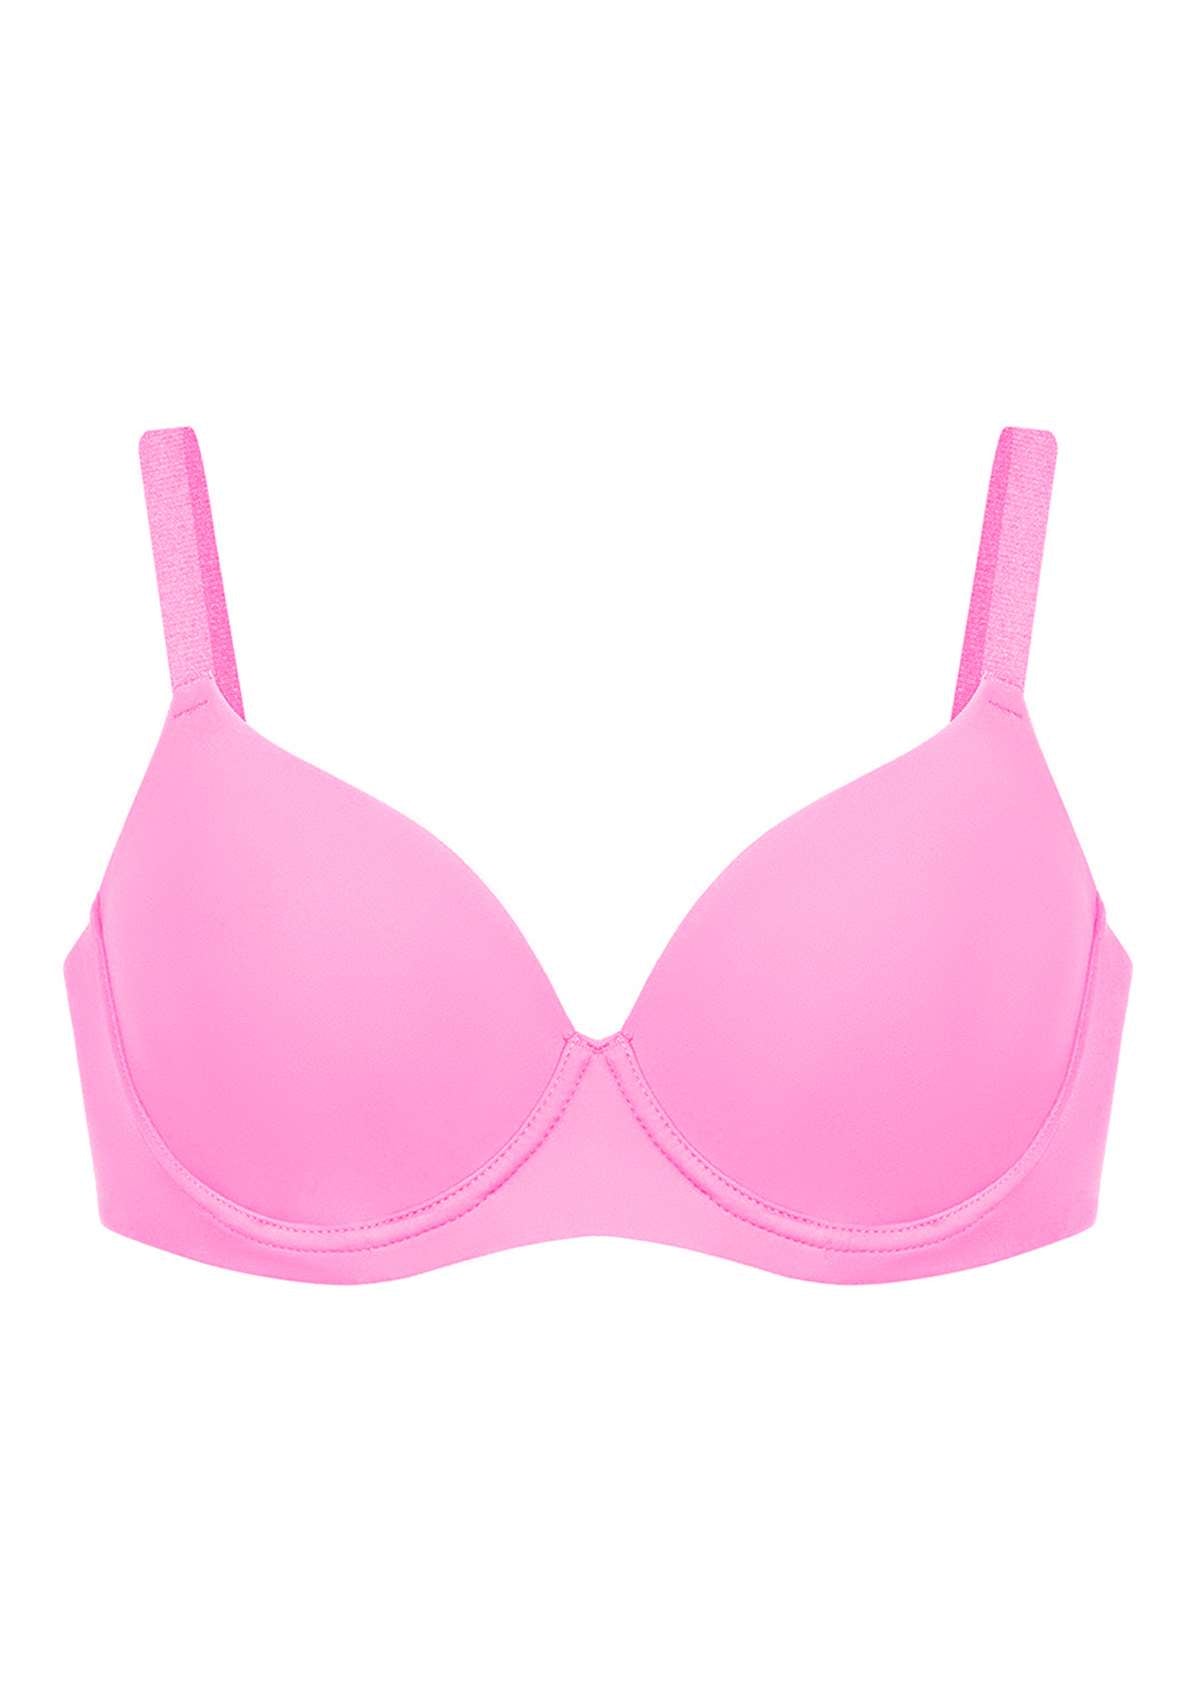 HSIA Gemma Smooth Lightly Padded T-shirt Bra For Heavy Breasts - Pink / 36 / DDD/F